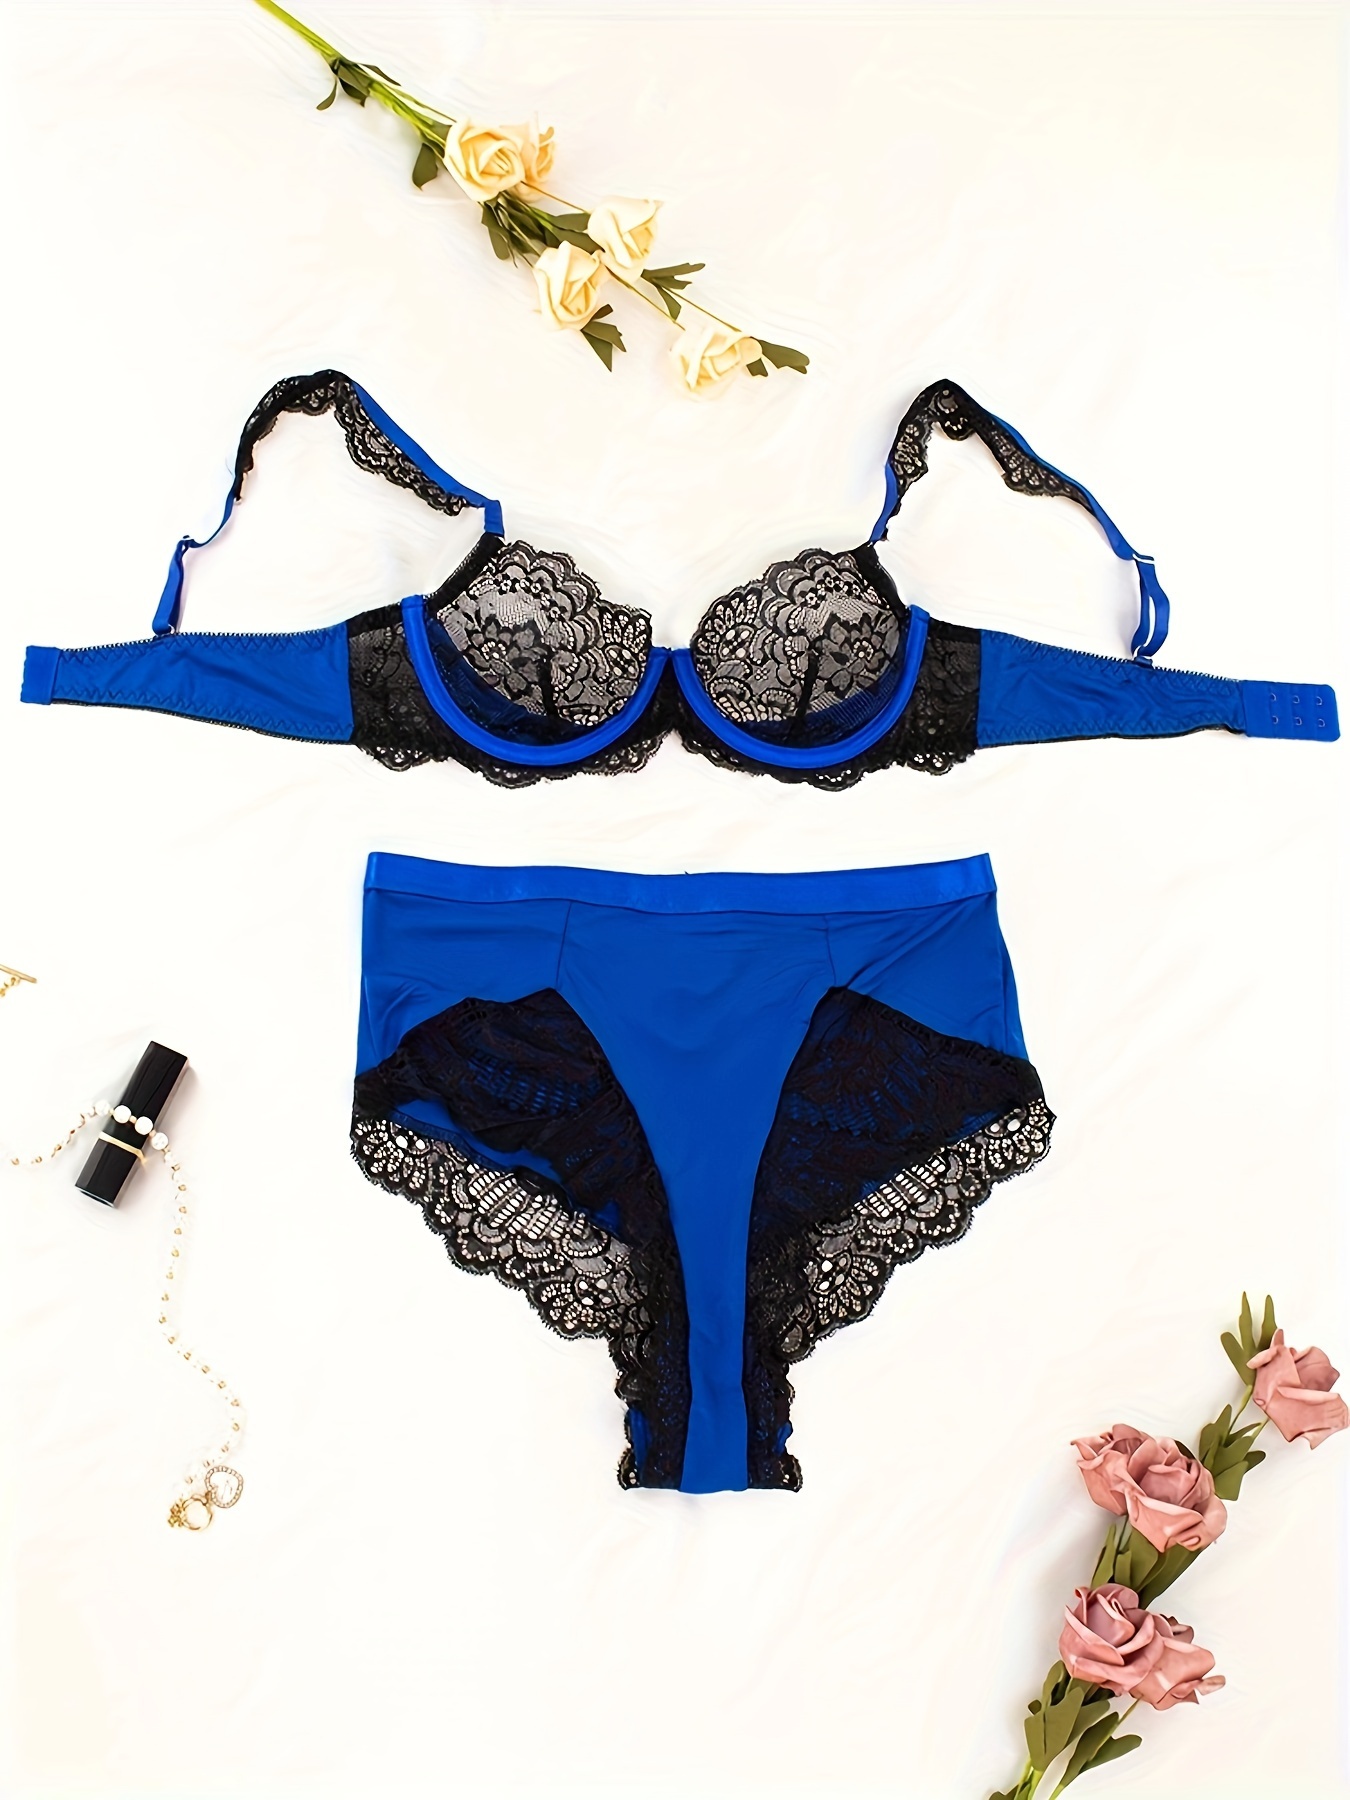 Contrast Lace Bra & Panties, Push Up Bra & Elastic Panties Lingerie Set,  Women's Lingerie & Underwear